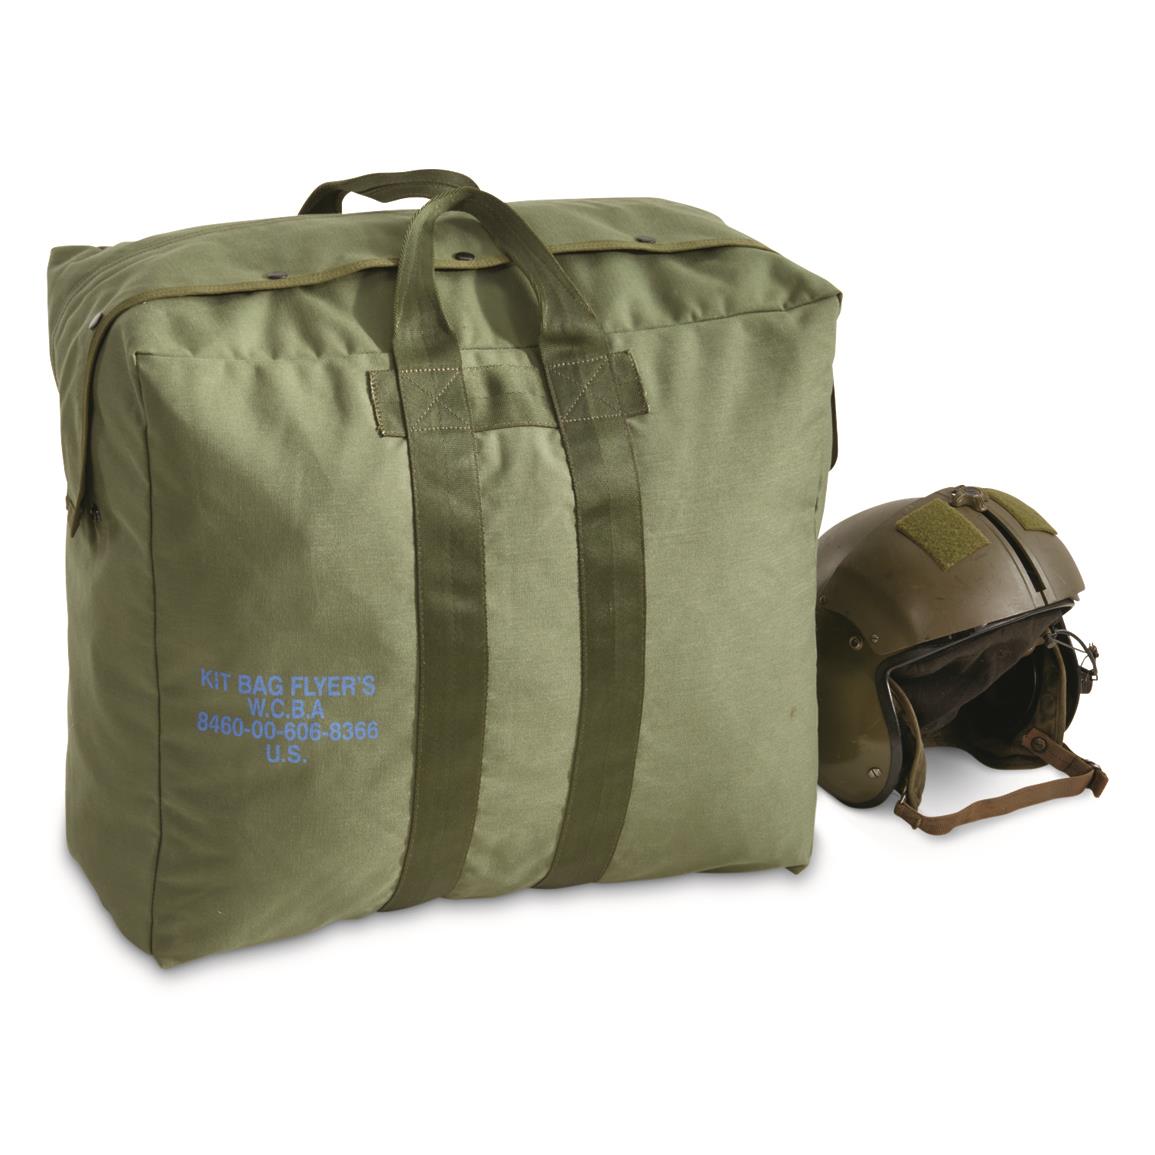 U.S. Air Force Surplus Flyers Kit Bag, New, Olive Drab